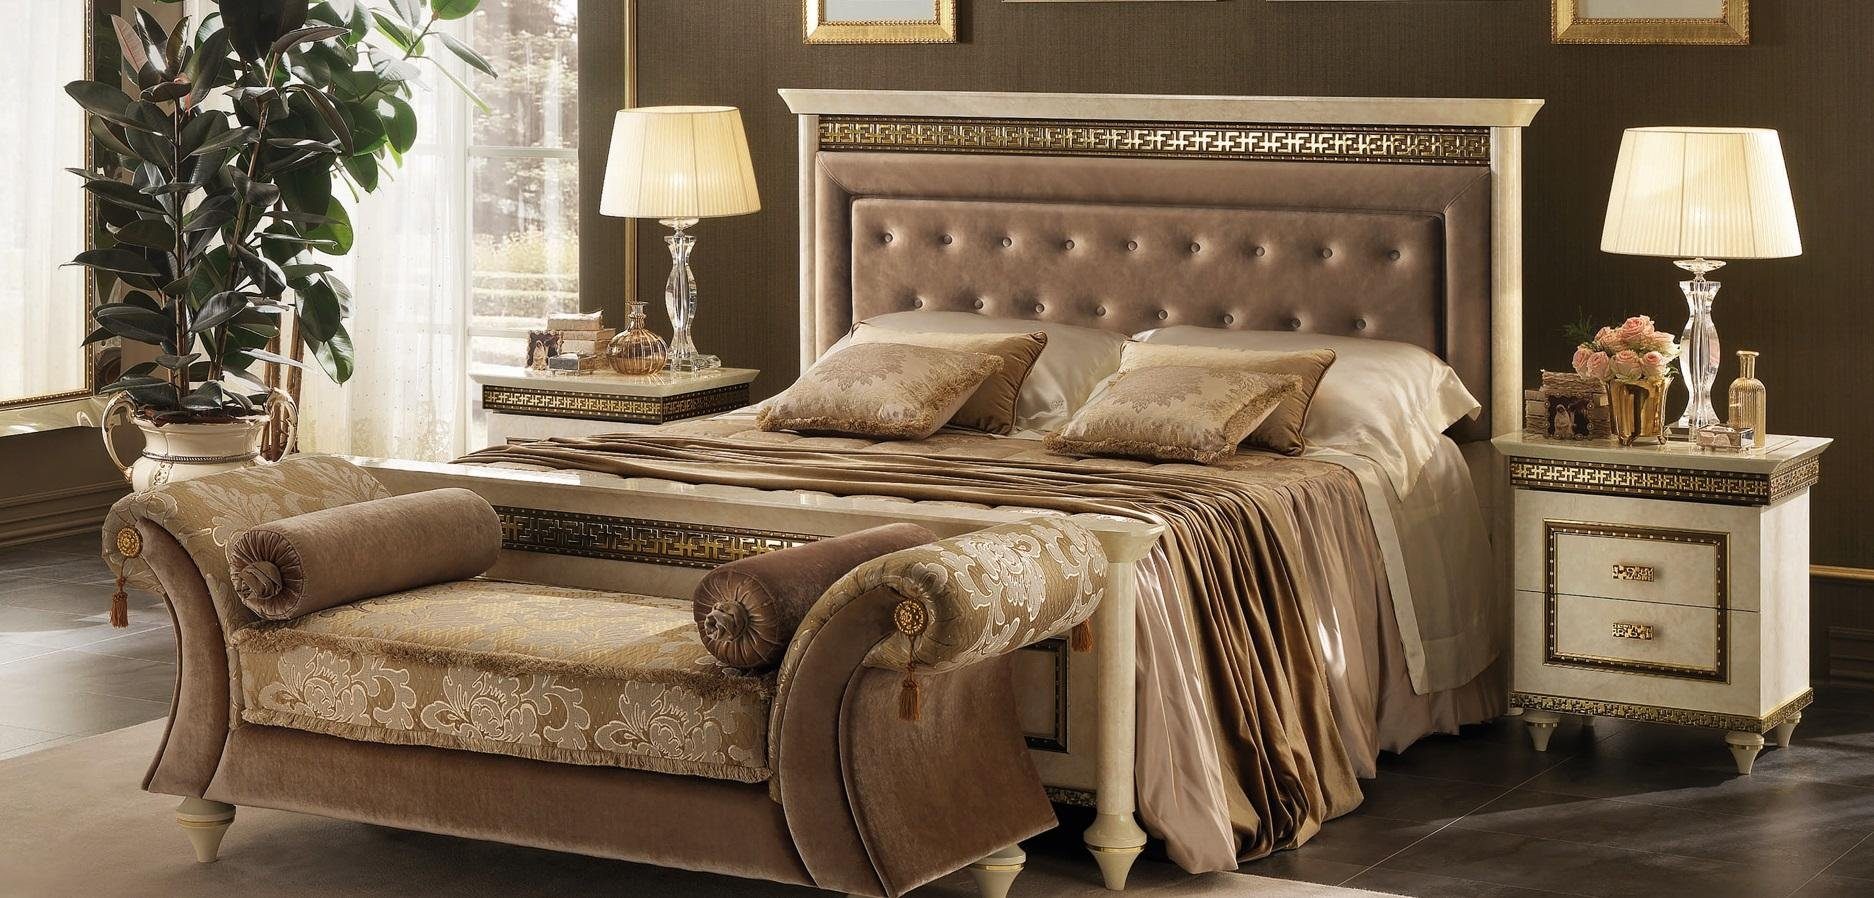 JVmoebel Bett Klassisches Bett Barock Rokoko Polsterbett Doppelbett arredoclassic